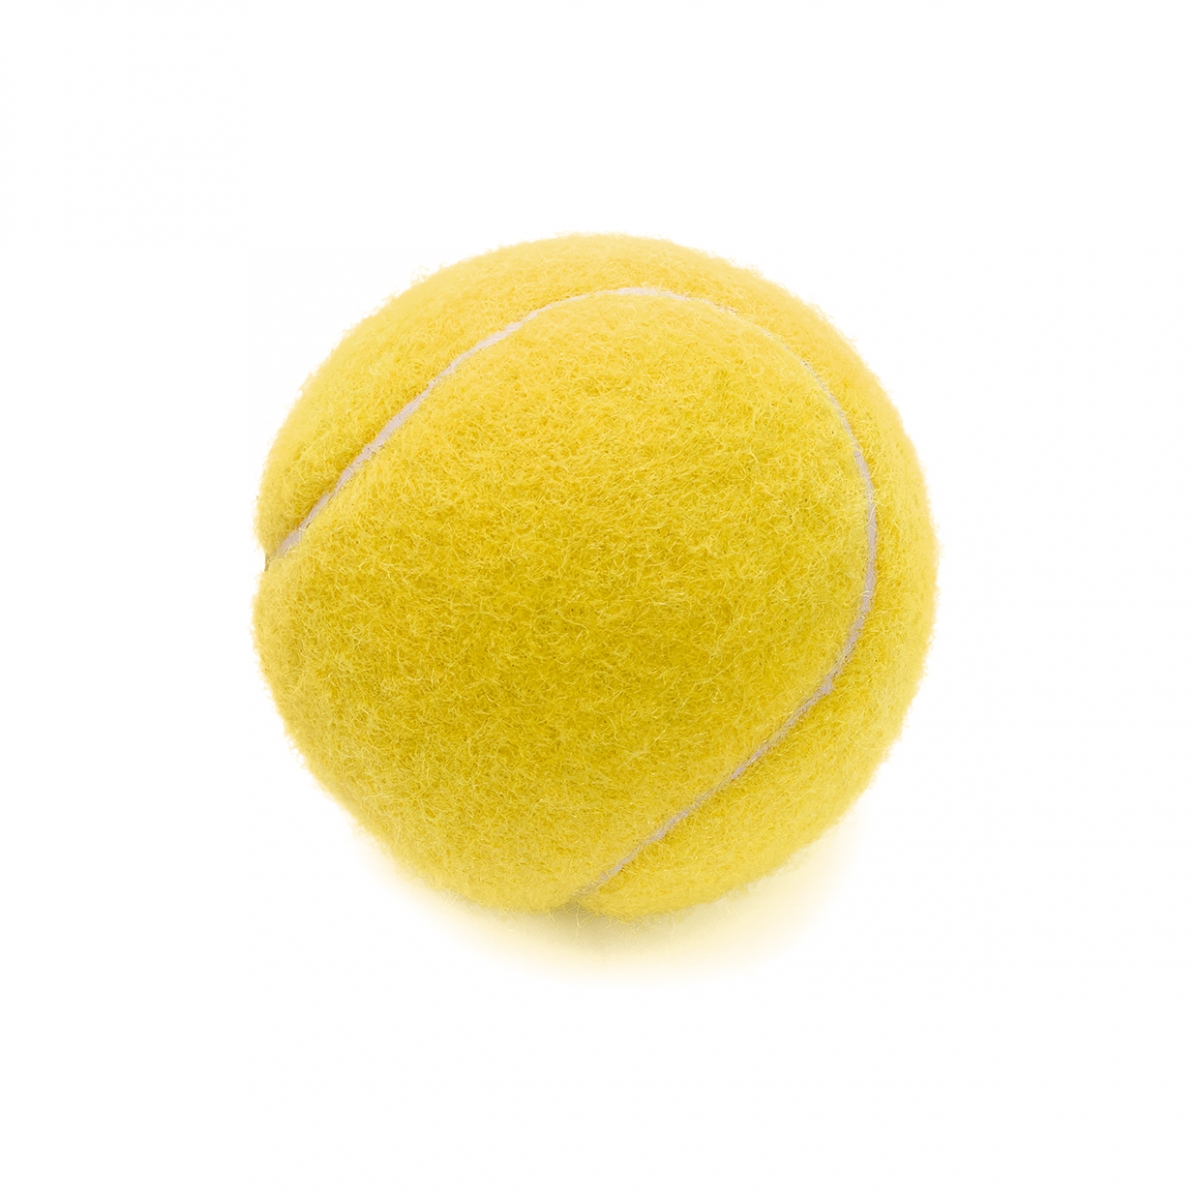 Imagen en la que se ve una pelota de tenis